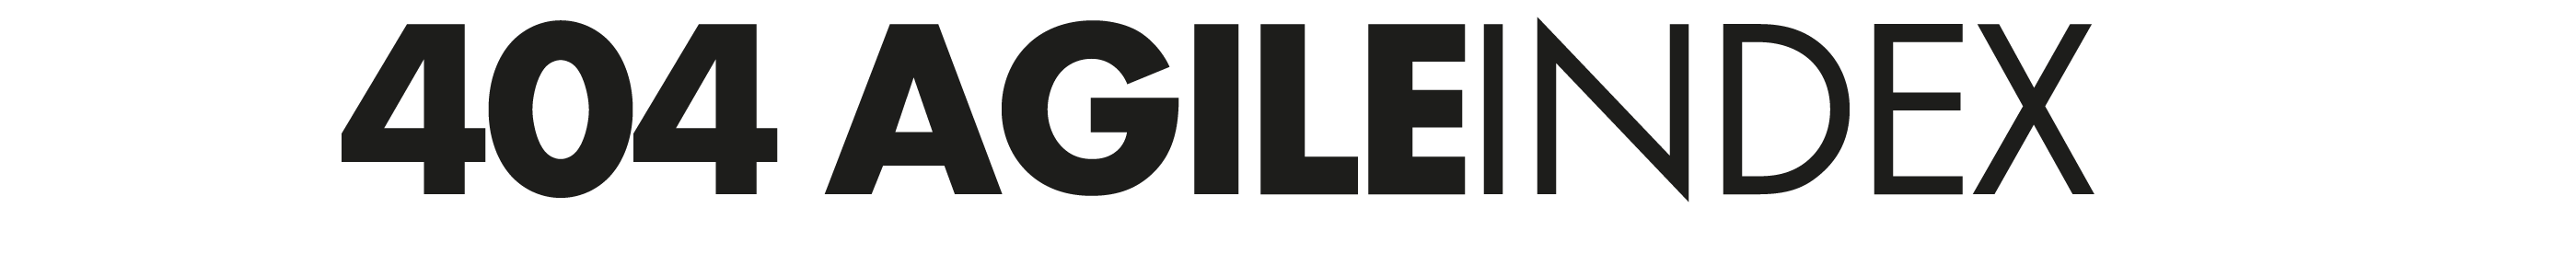 AGILE INDEX - Das Agile Unternehmen Inhalte